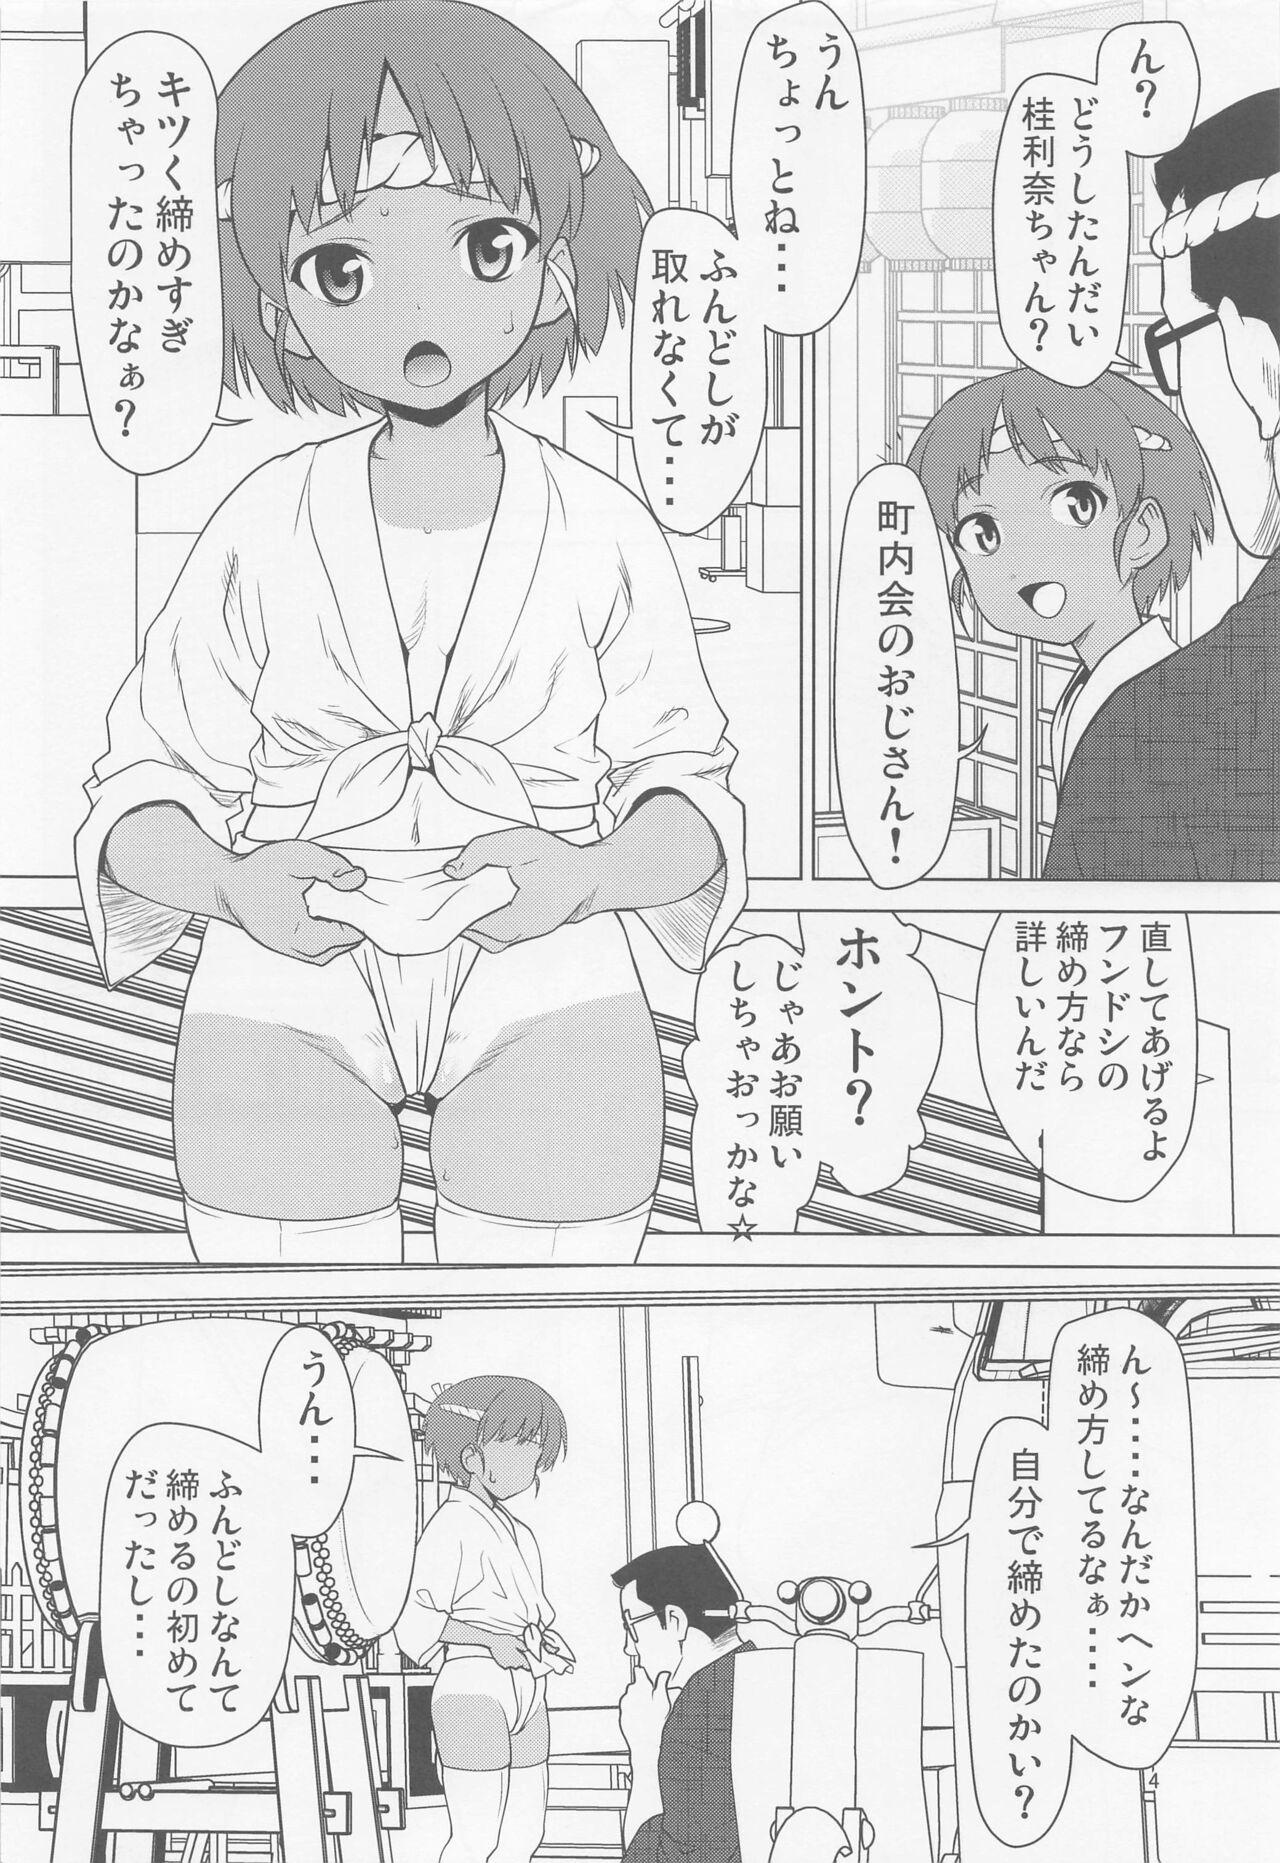 Black hiyakefundoshinokarinachantomonokagede・・・・ Lesbiansex - Page 3